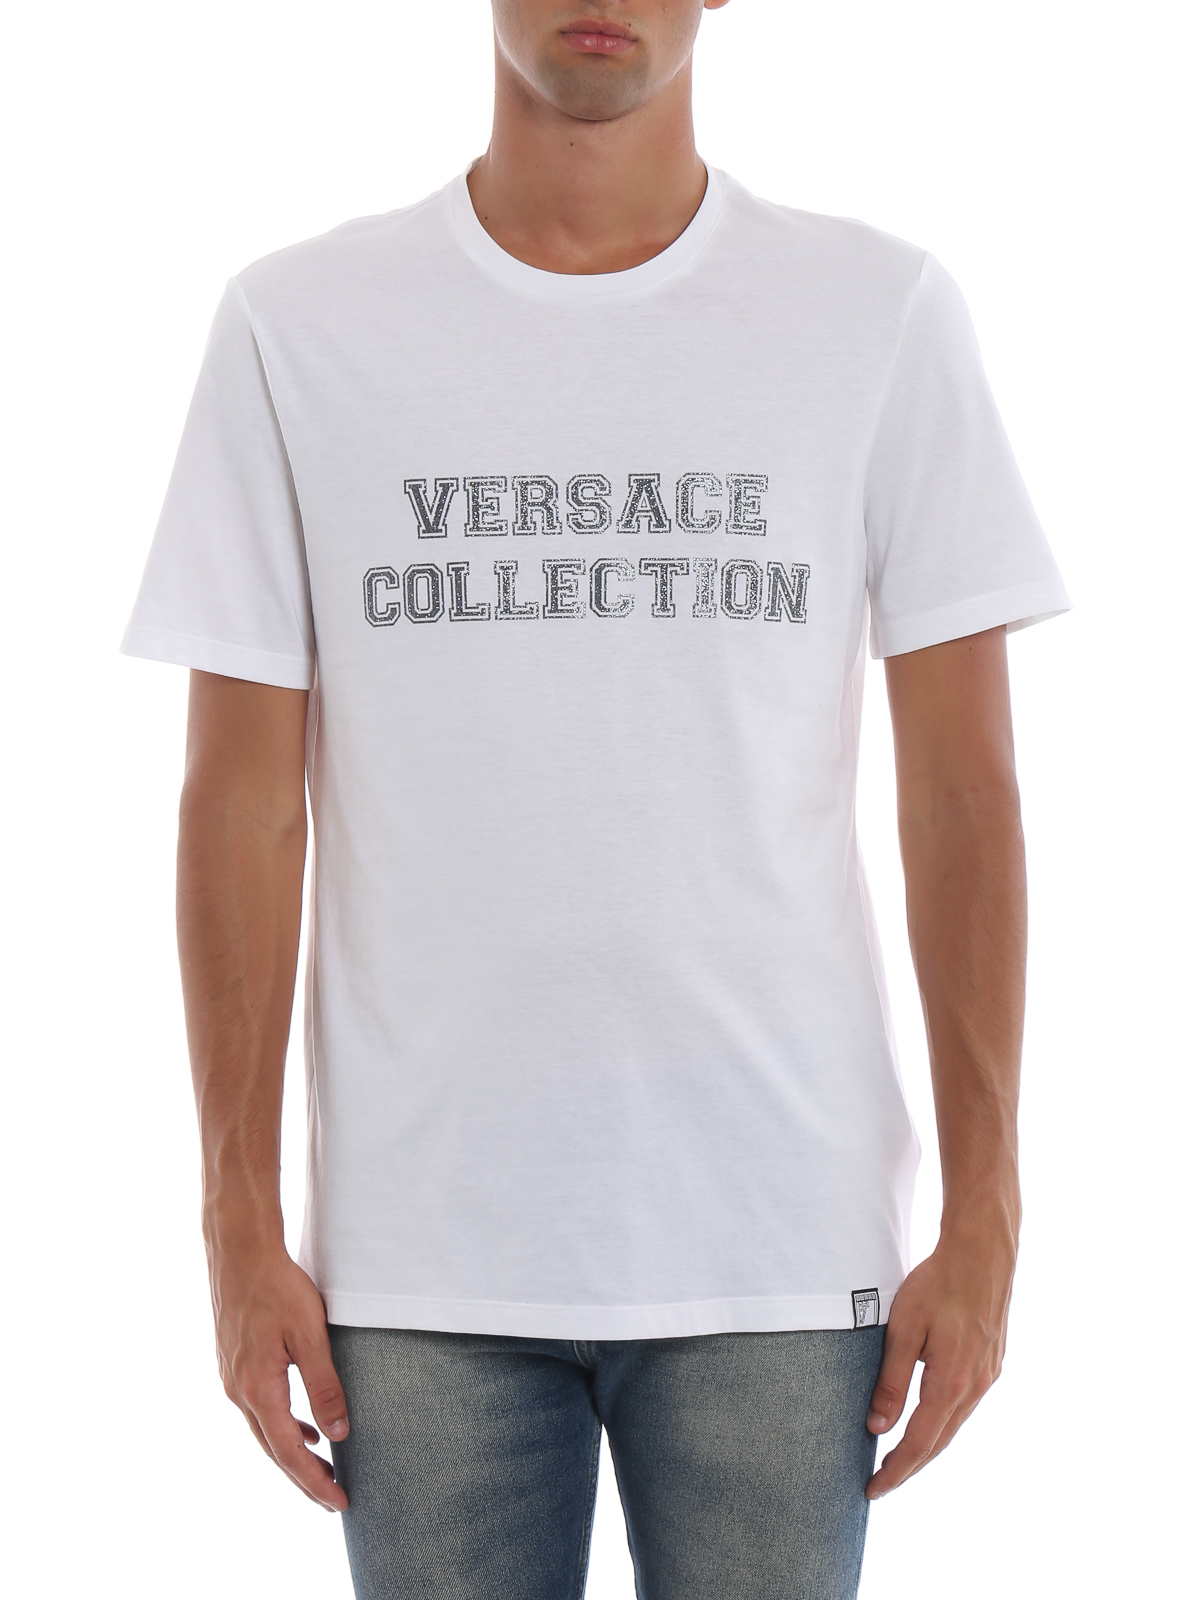 Collection t me. LF collection футболка мужская. Футболка Версаче оригинал. B C collection футболка.